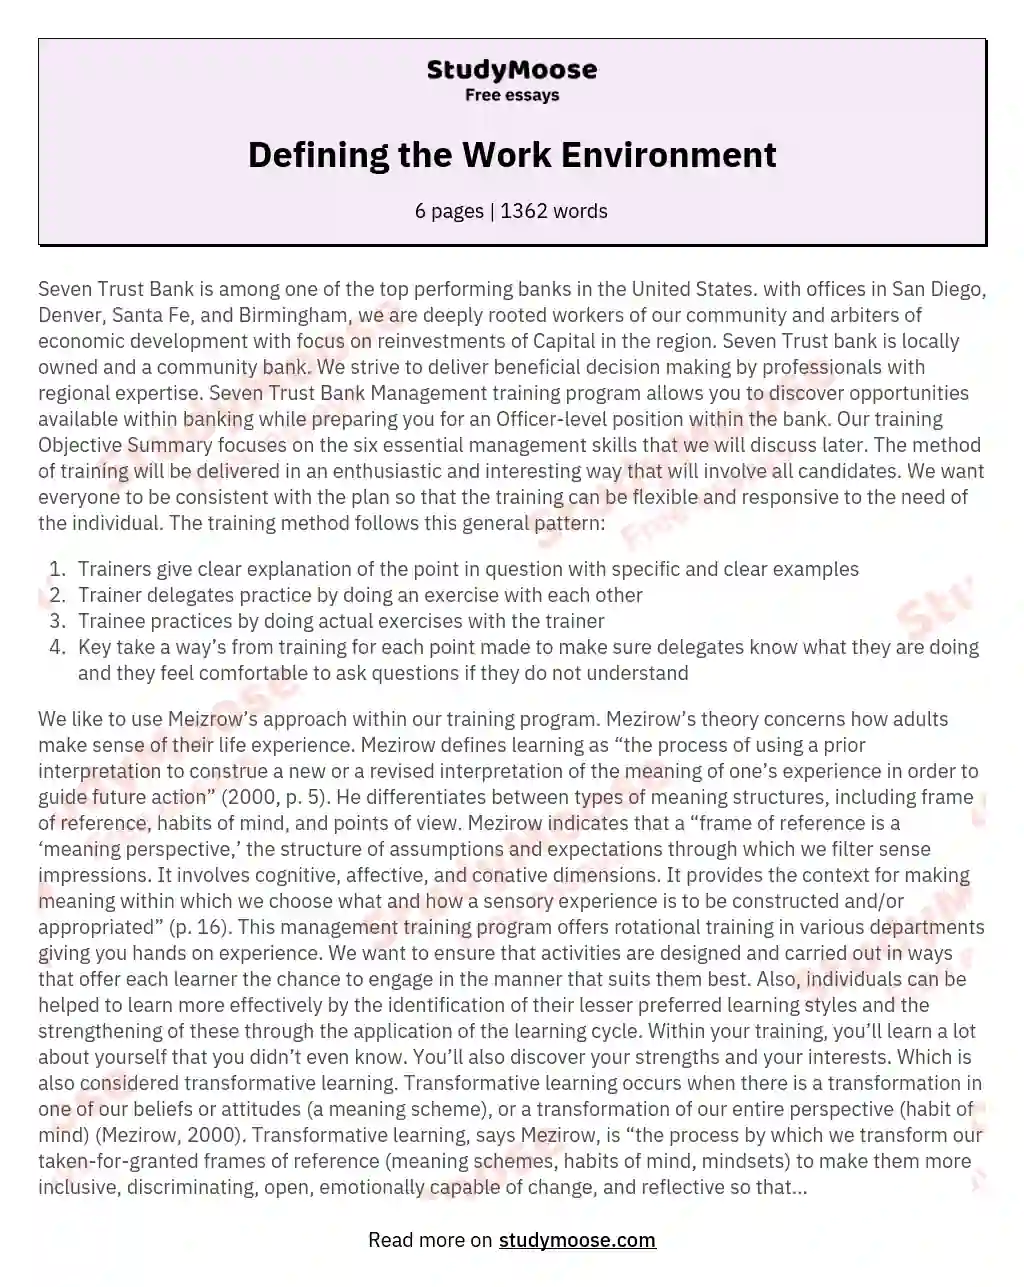 Defining the Work Environment essay